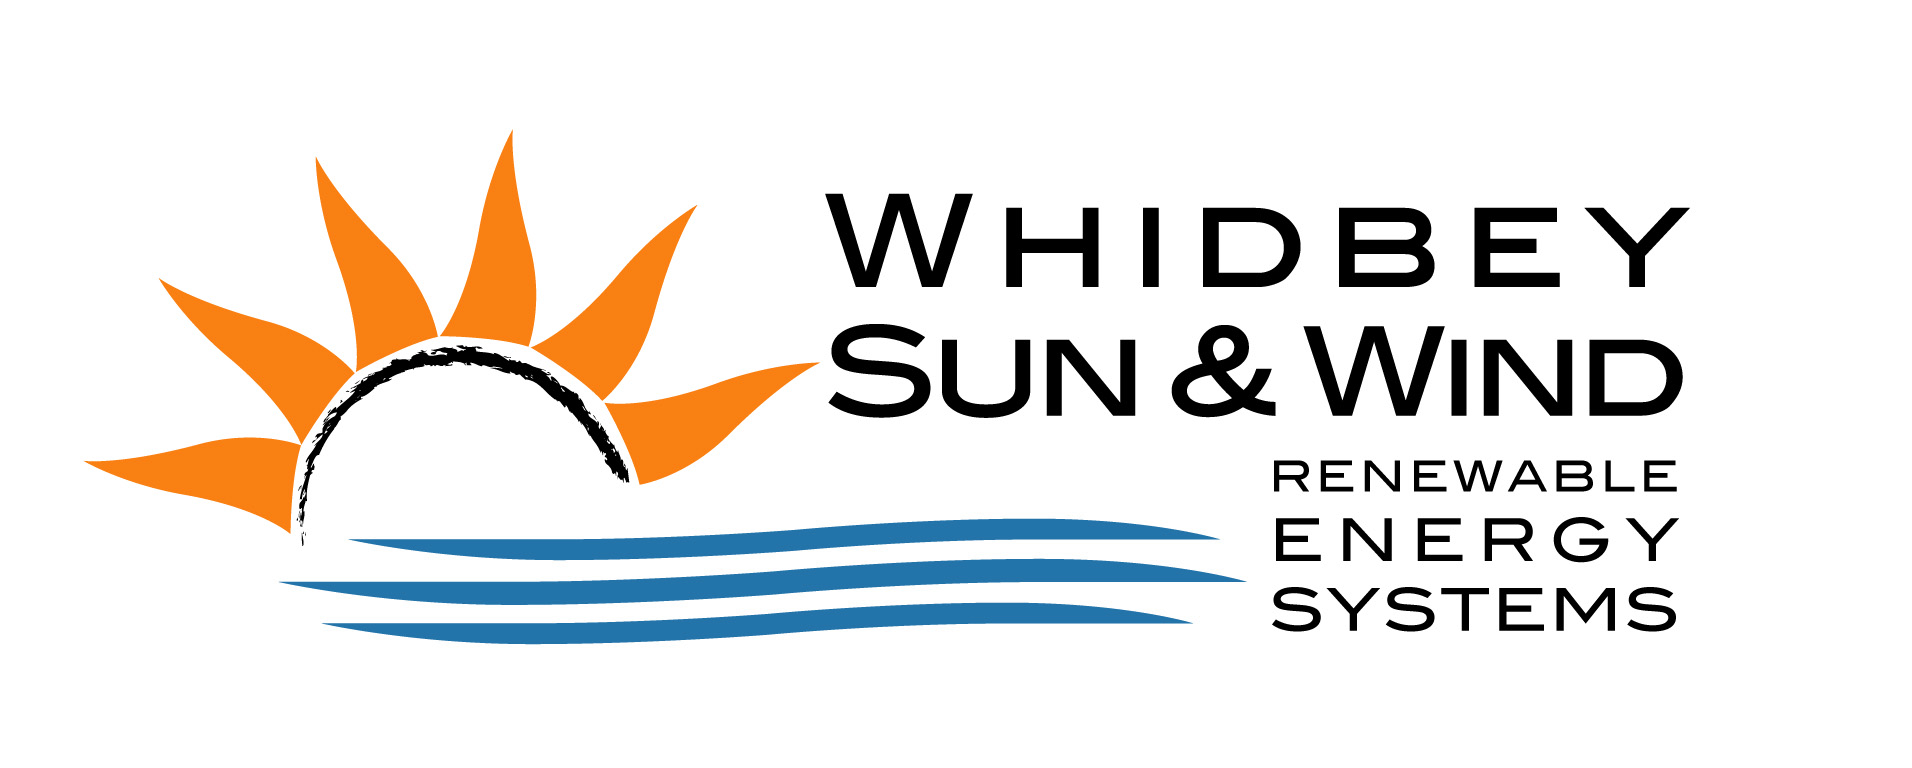 Whidbey Sun & Wind logo — Solarize Northwest